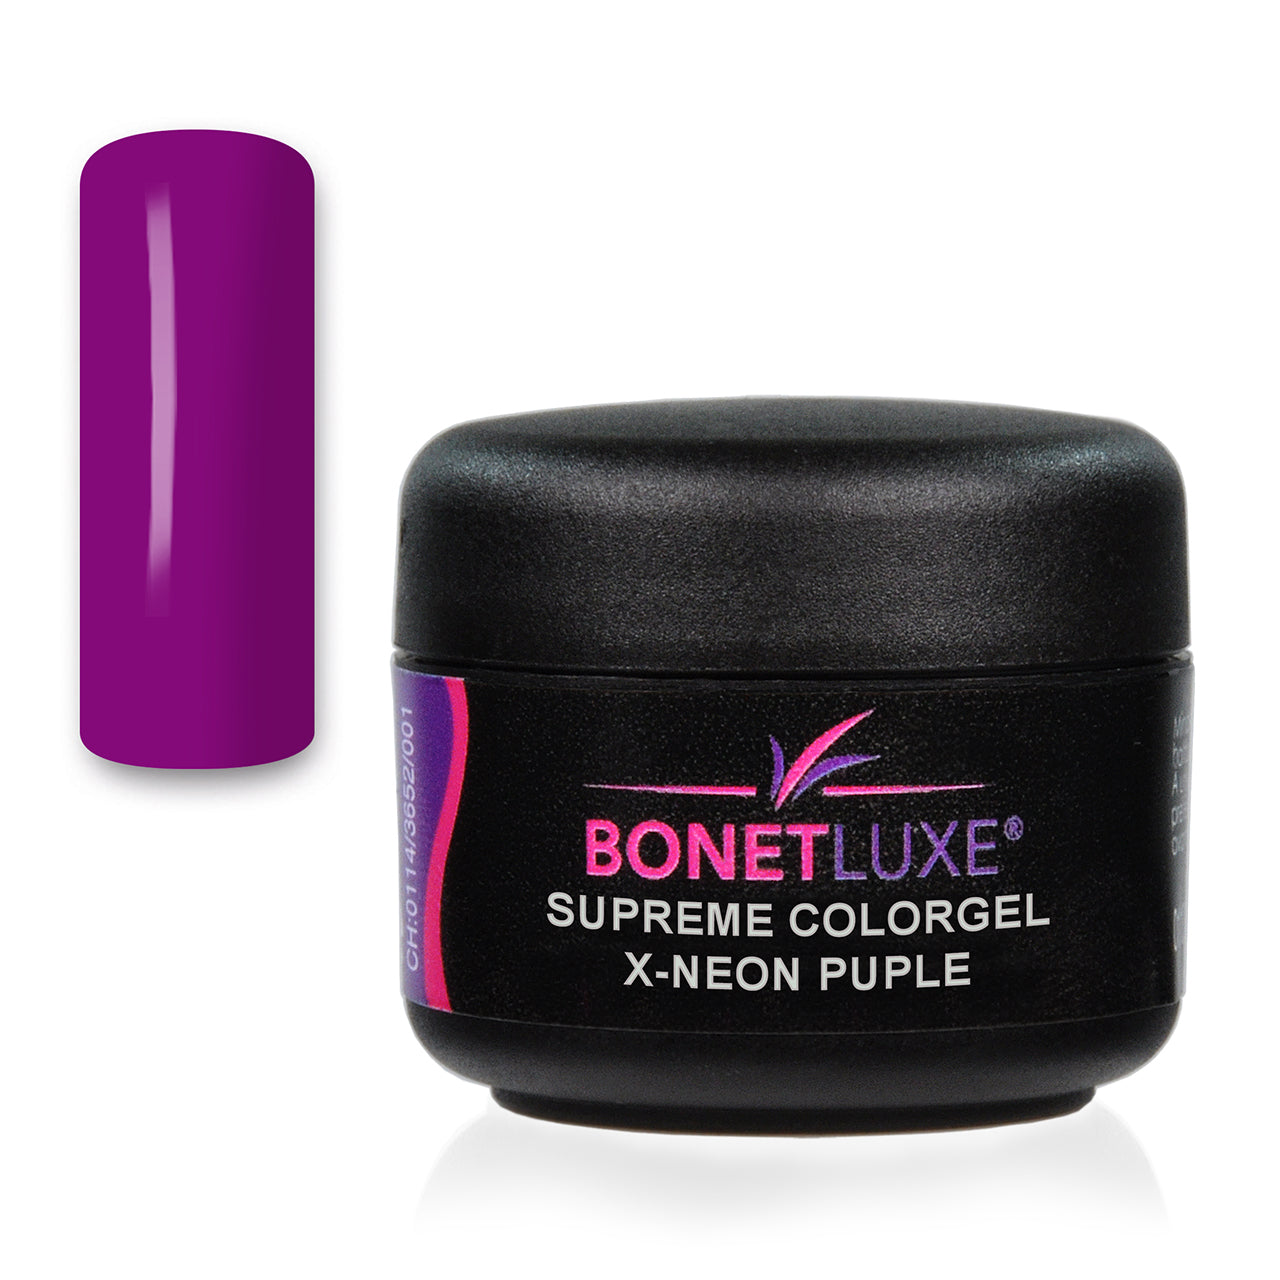 Bonetluxe Supreme Colorgel X-Neon Purple